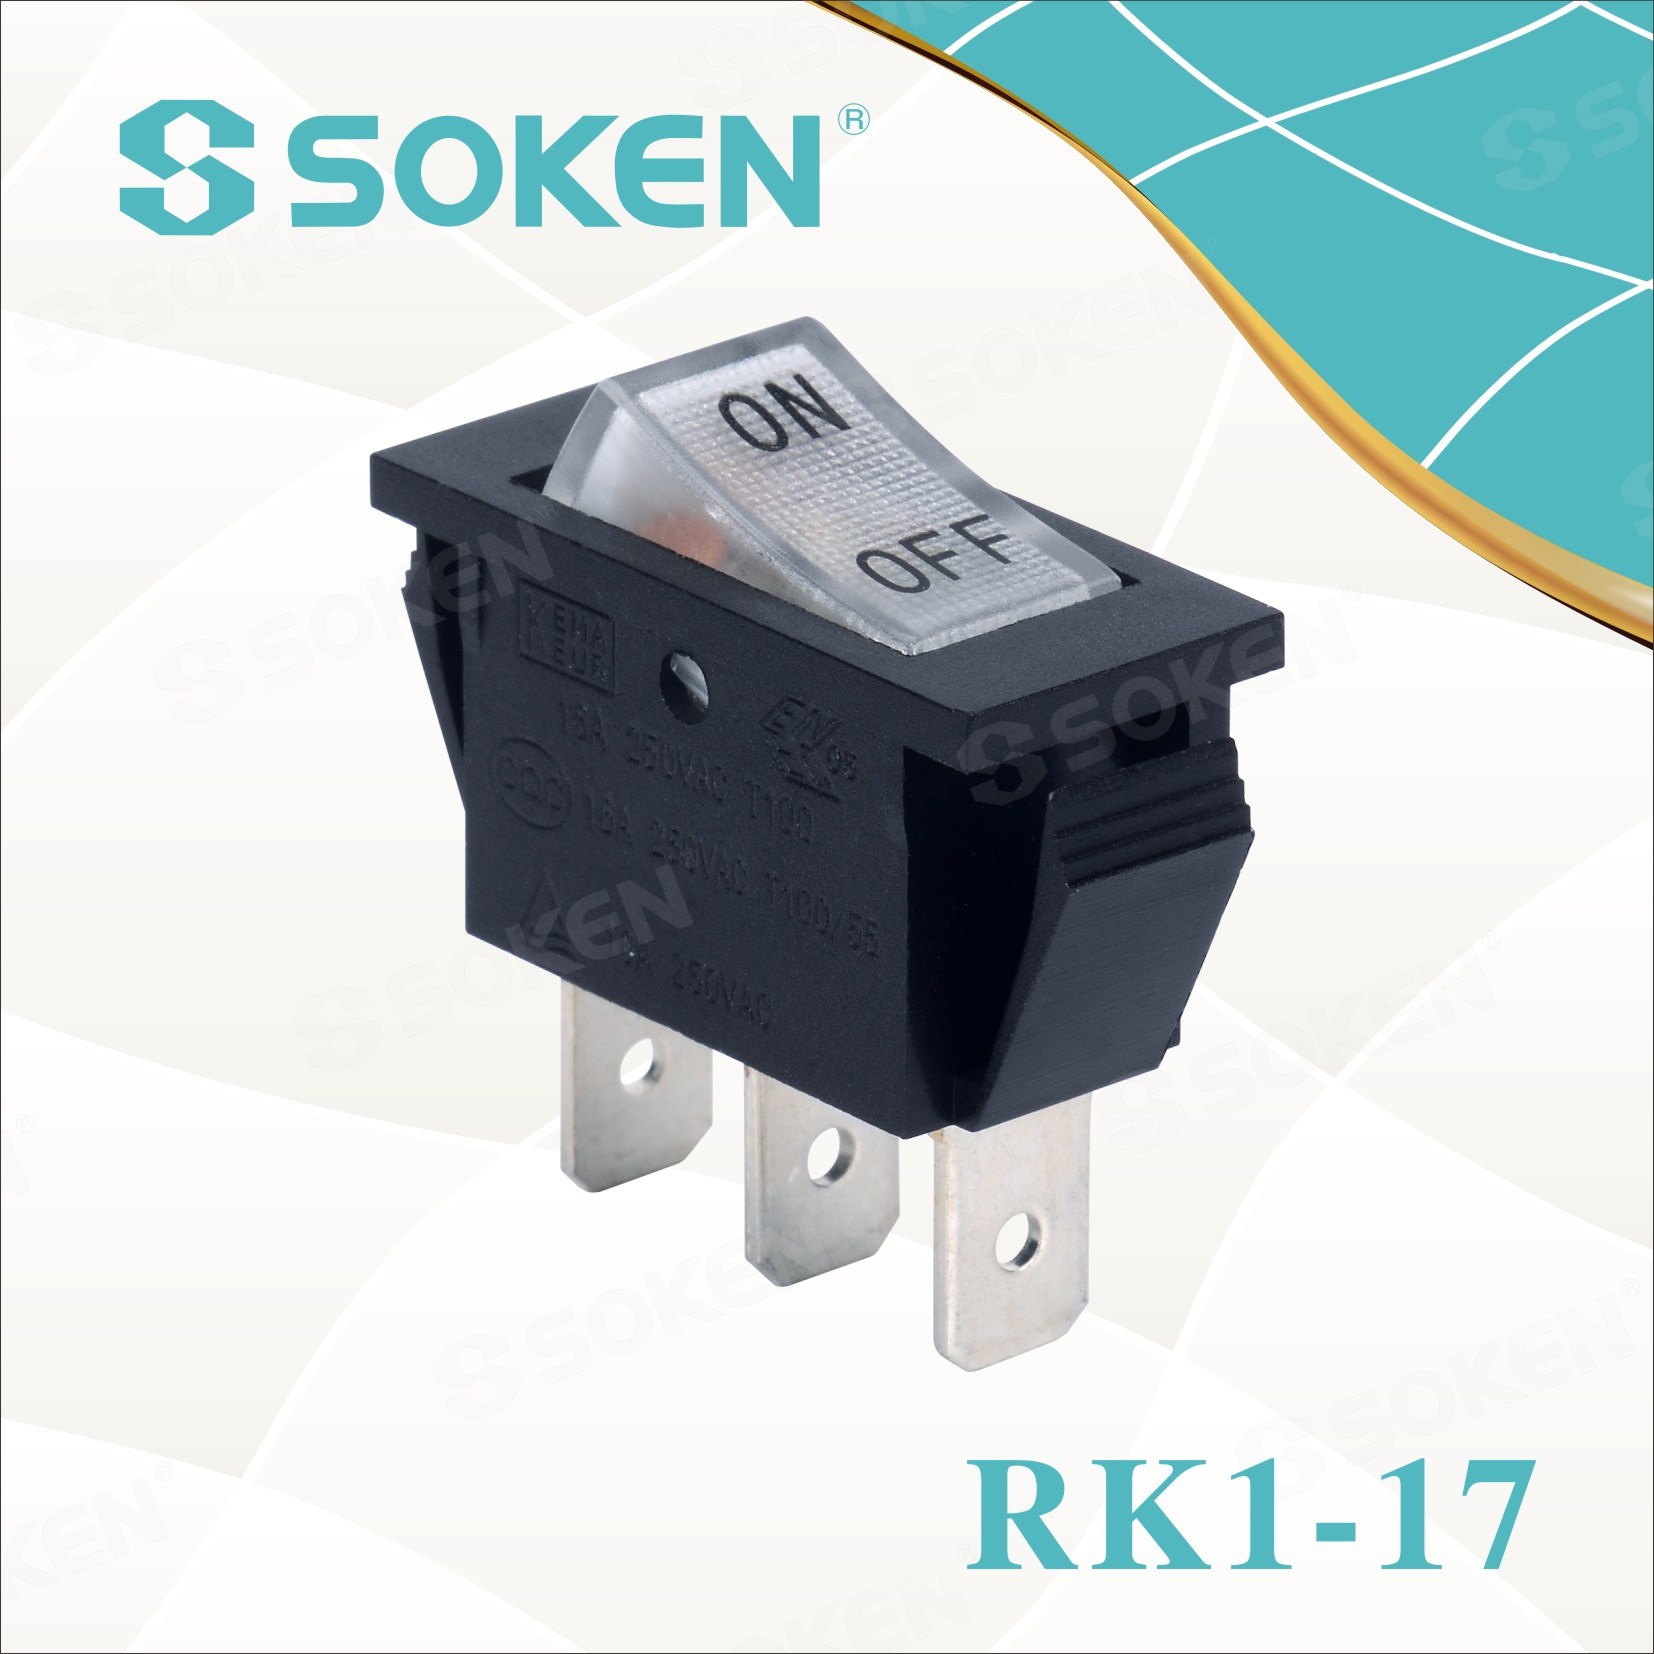 Soken Rk1-17 1X1n on off Illuminated Rocker Switch